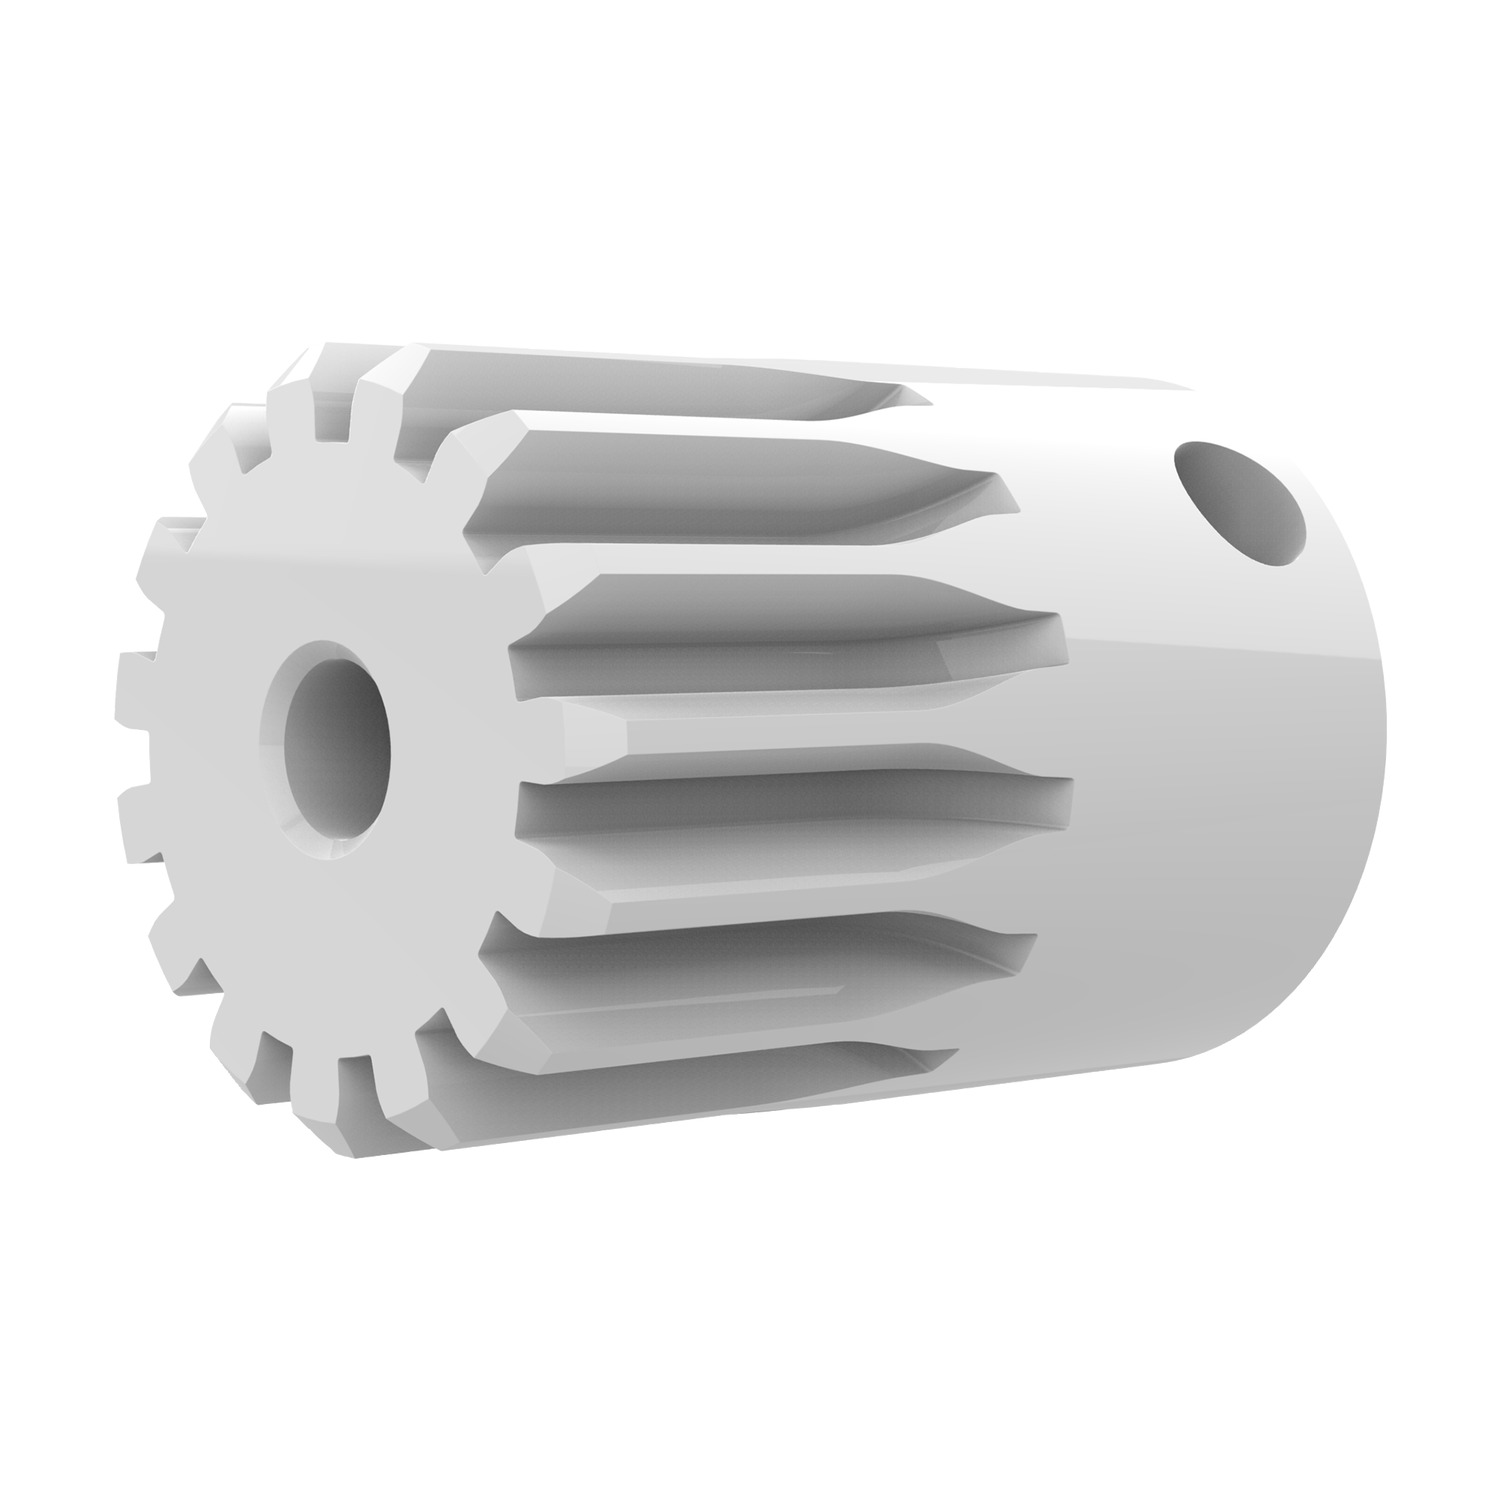 Product R5150, Spur Gears - Module 0.8 - Plastic white polyacetal - set screw - 14-15 teeth / 